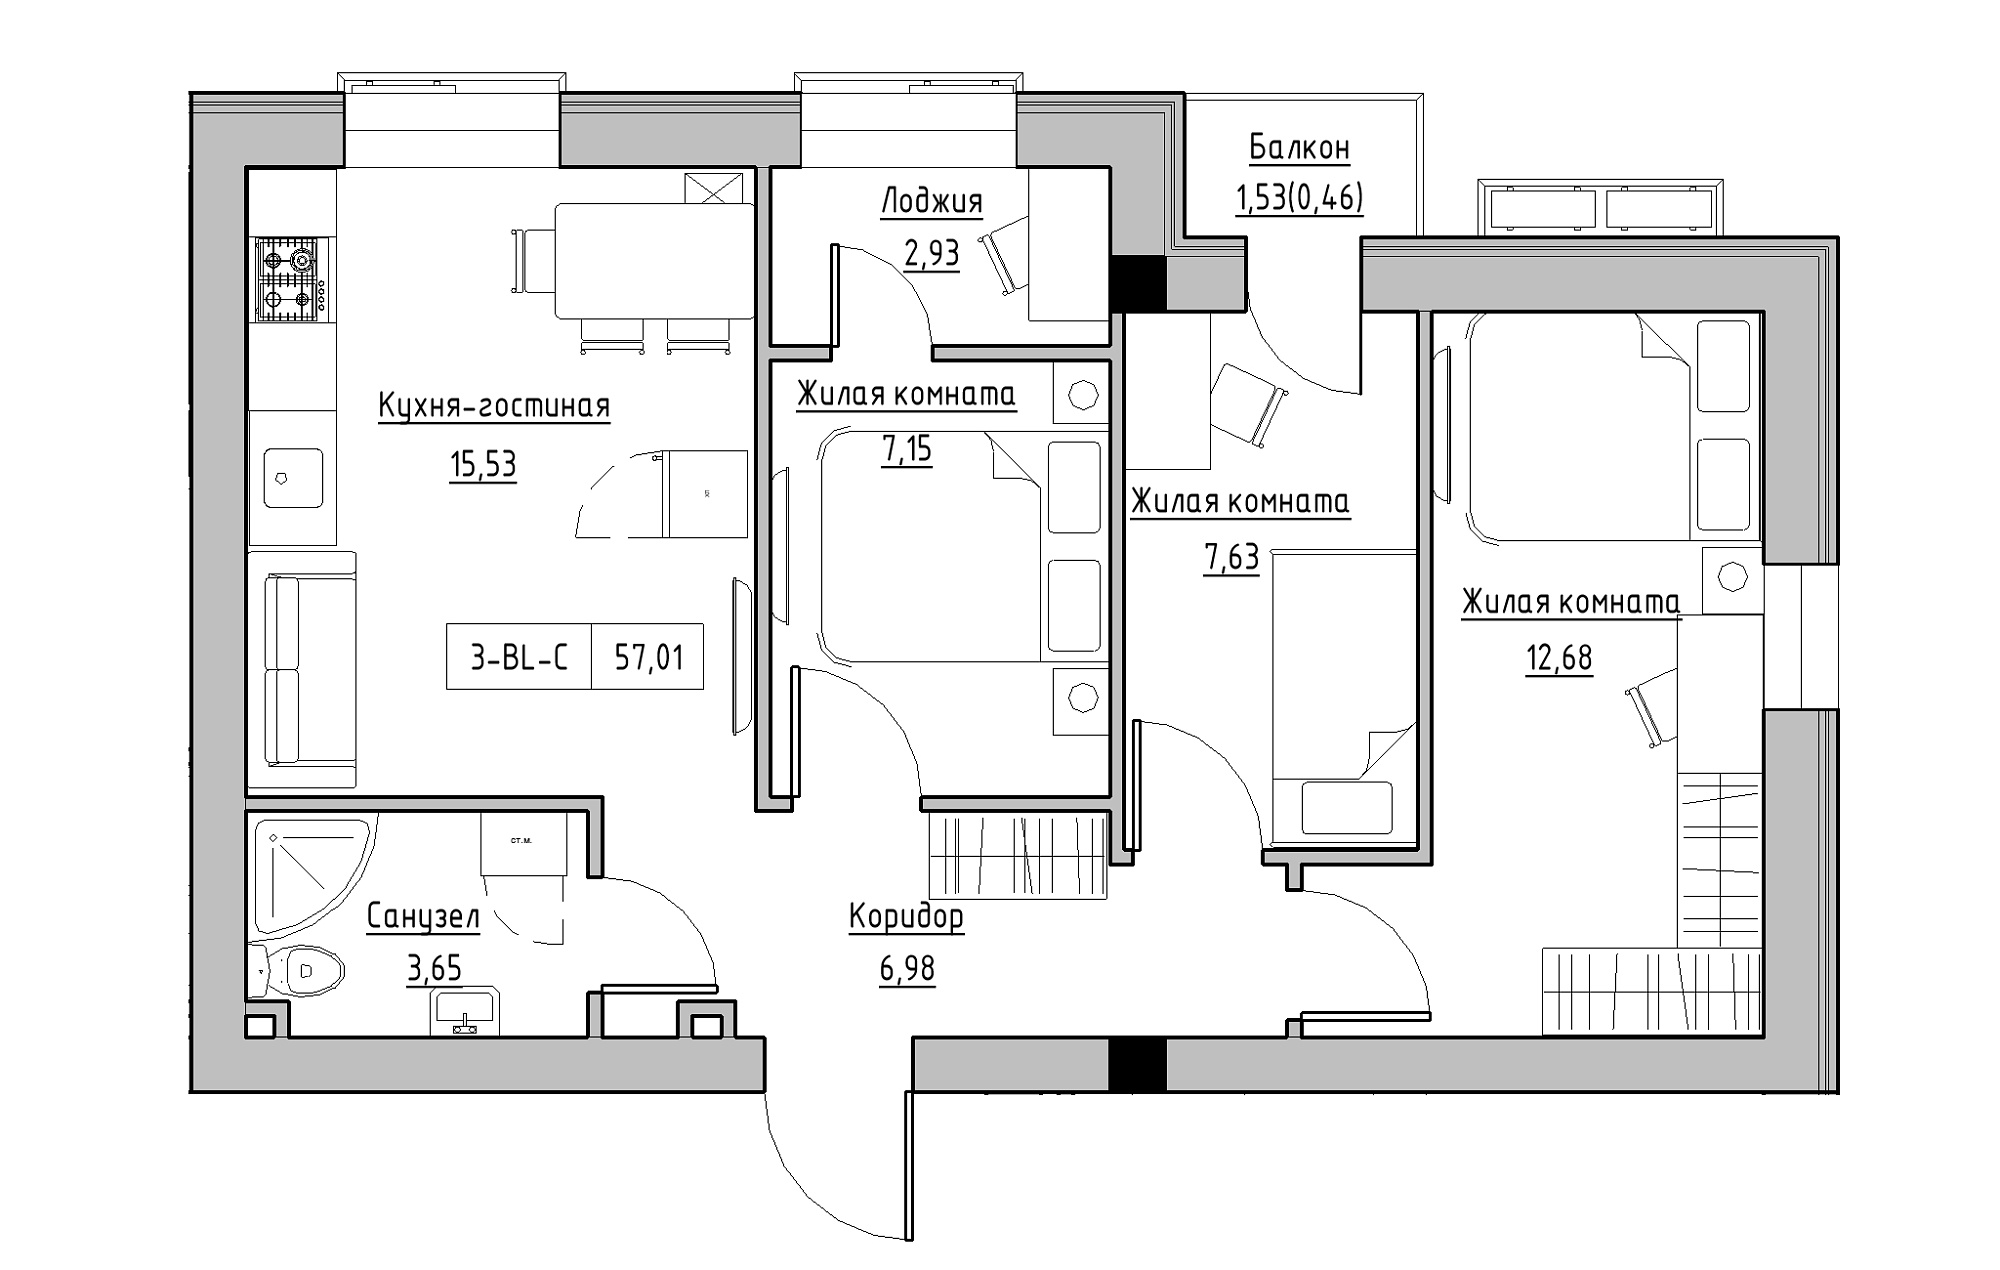 Planning 3-rm flats area 57.01m2, KS-018-03/0008.